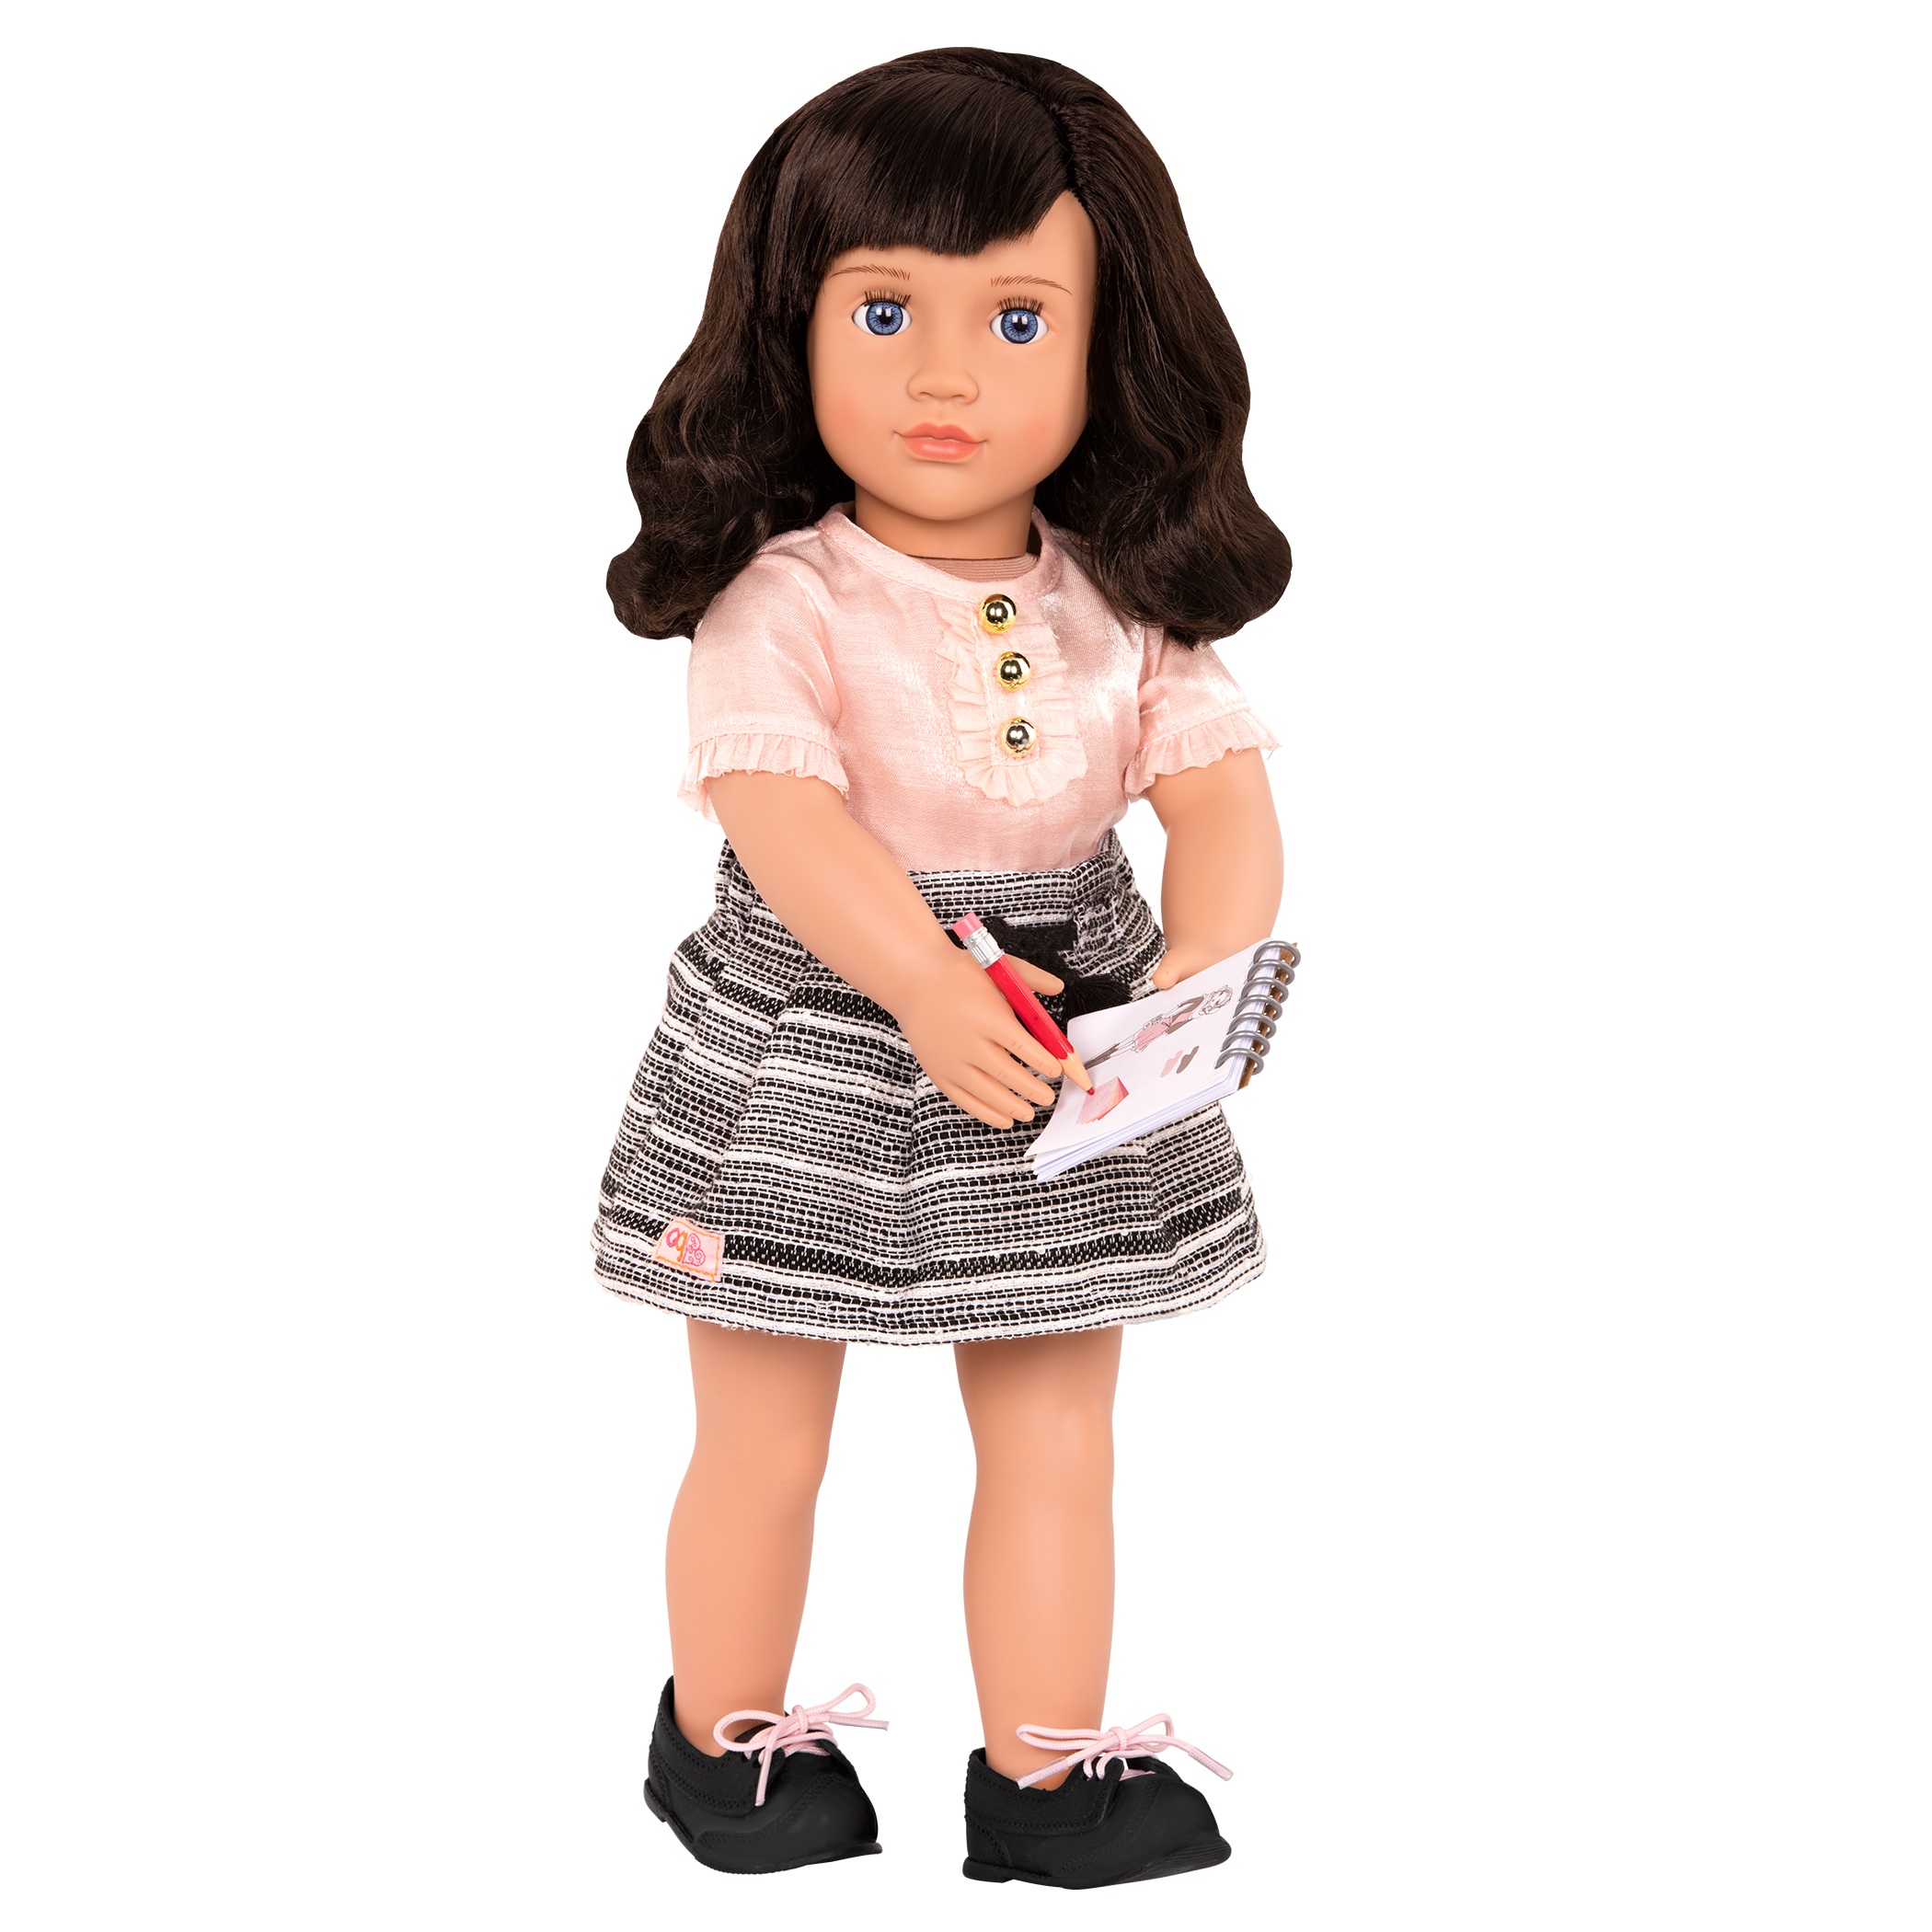 18-inch fashion designer doll with dark-brown hair, blue eyes and designing accessories